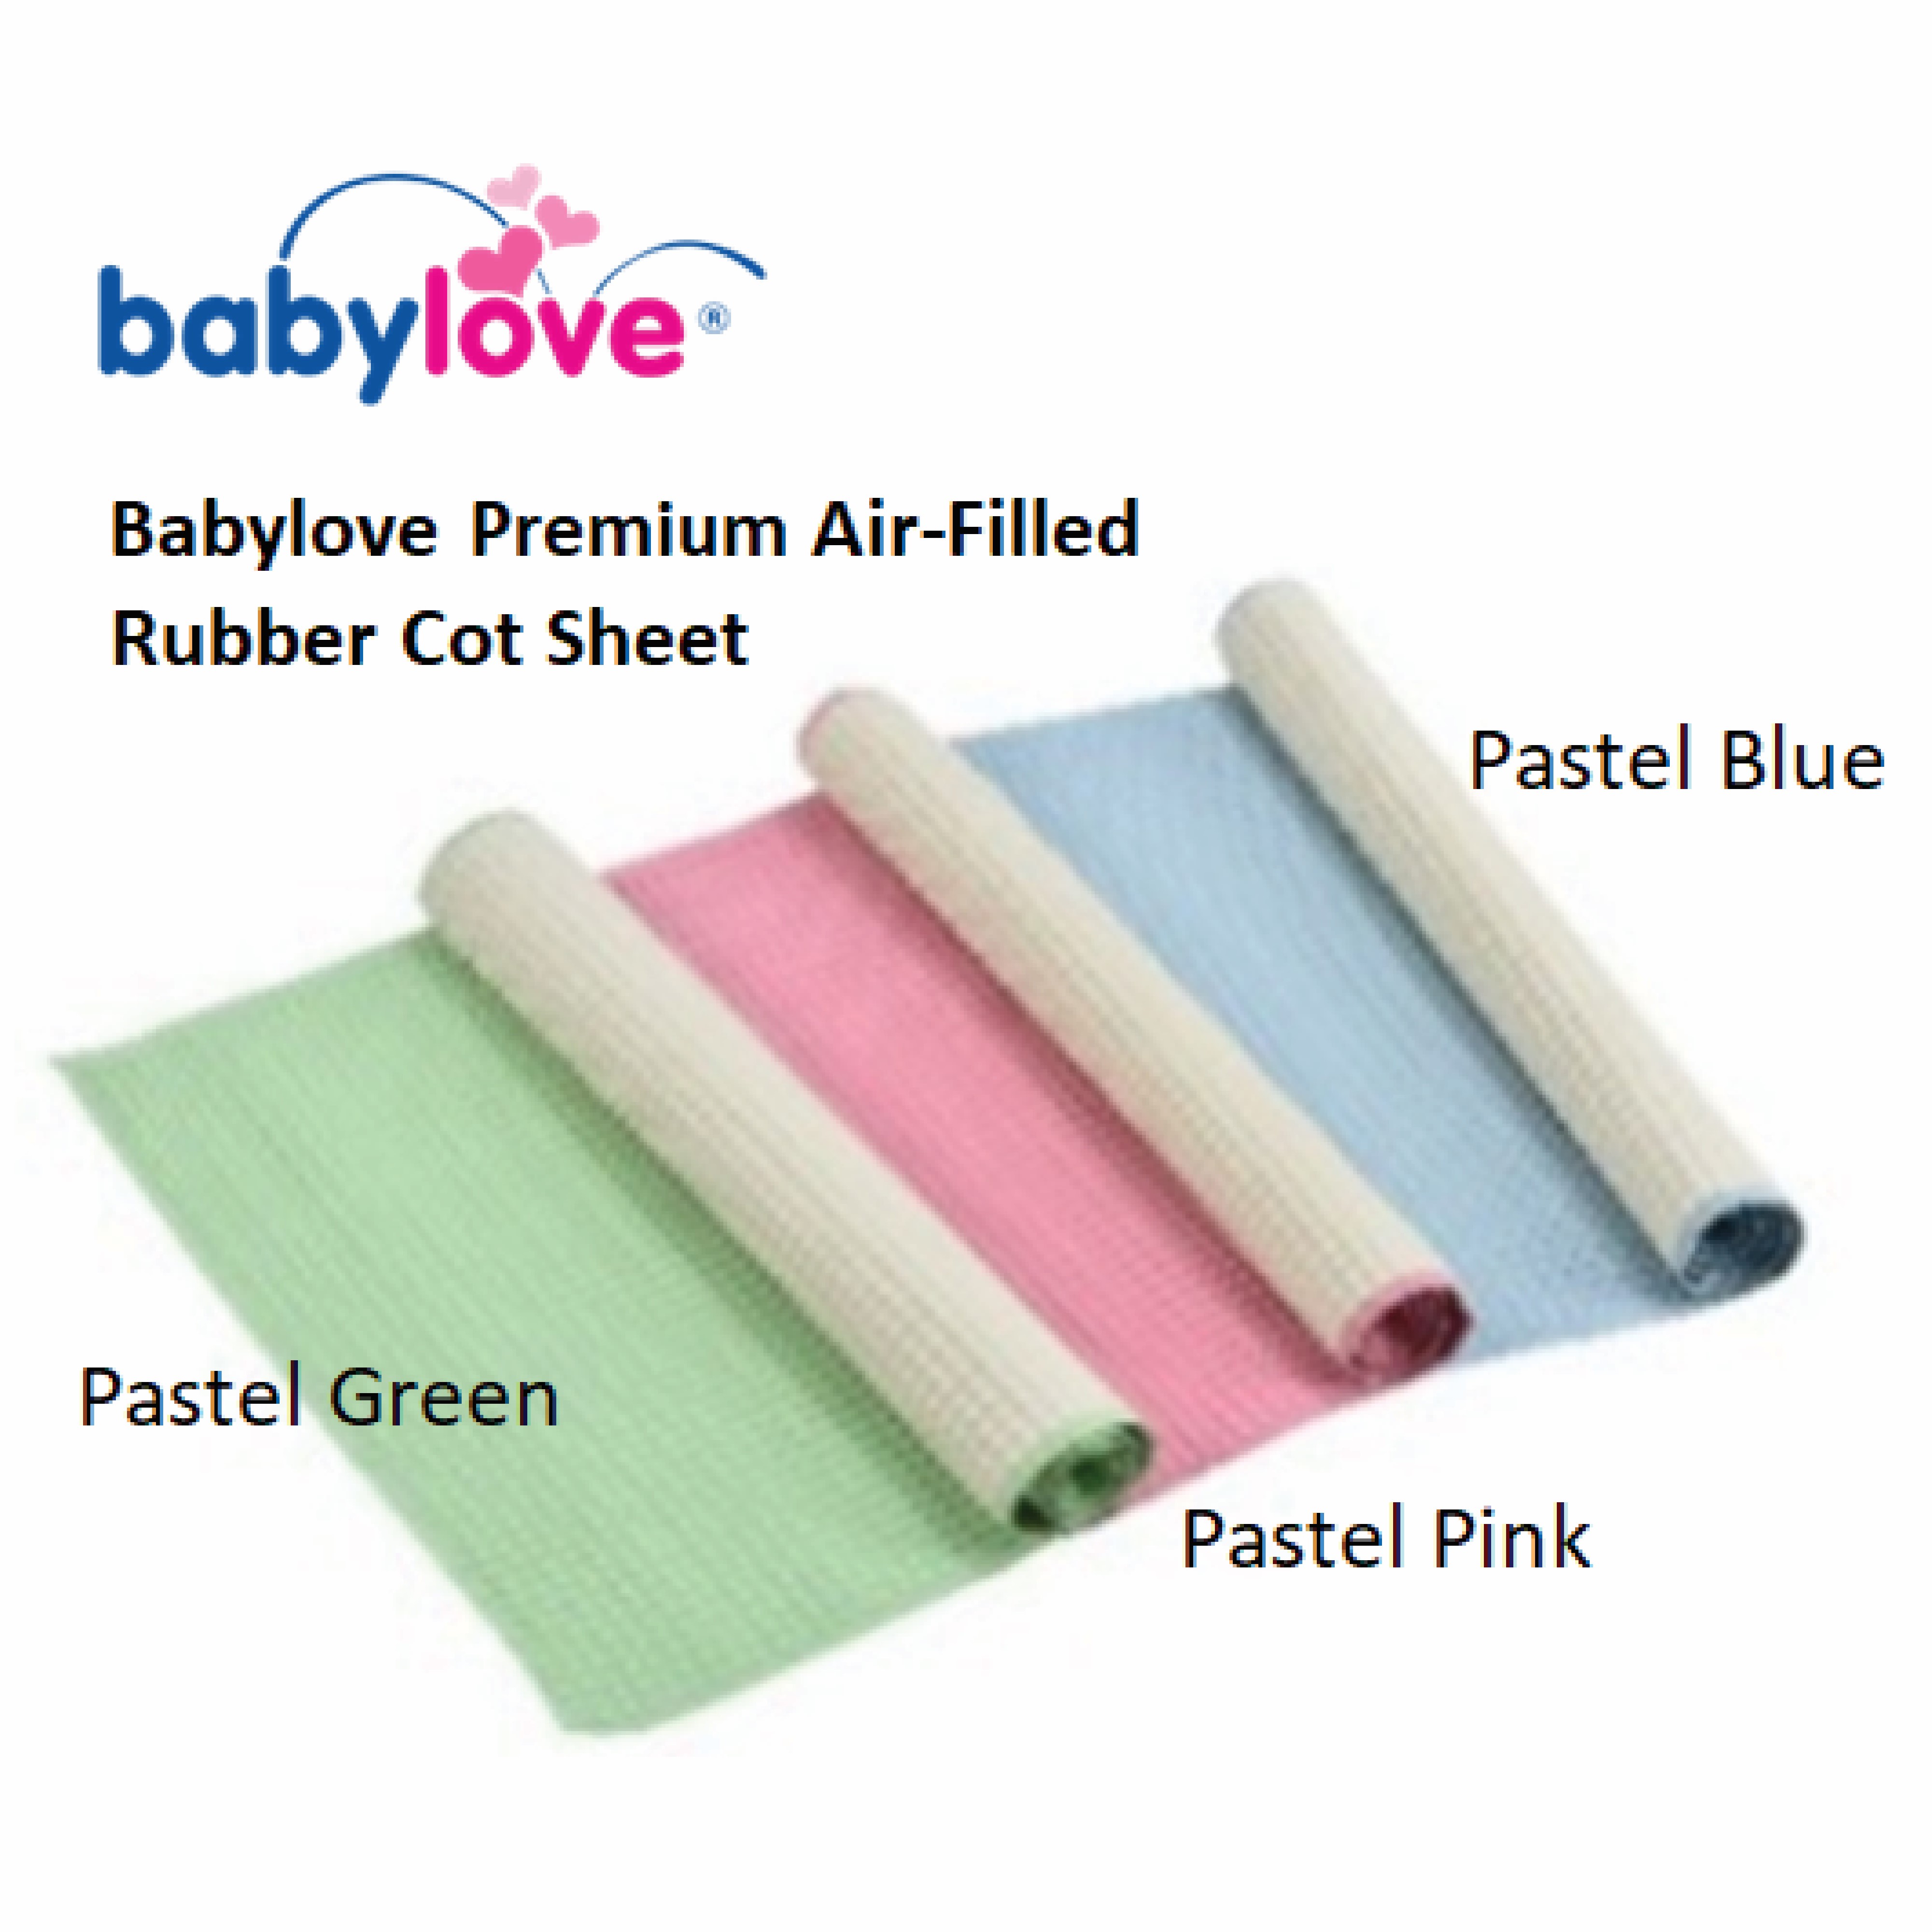 Babylove Rubber Cot Sheet - Regular Size 60 x 45cm / XL size 60 x 90cm